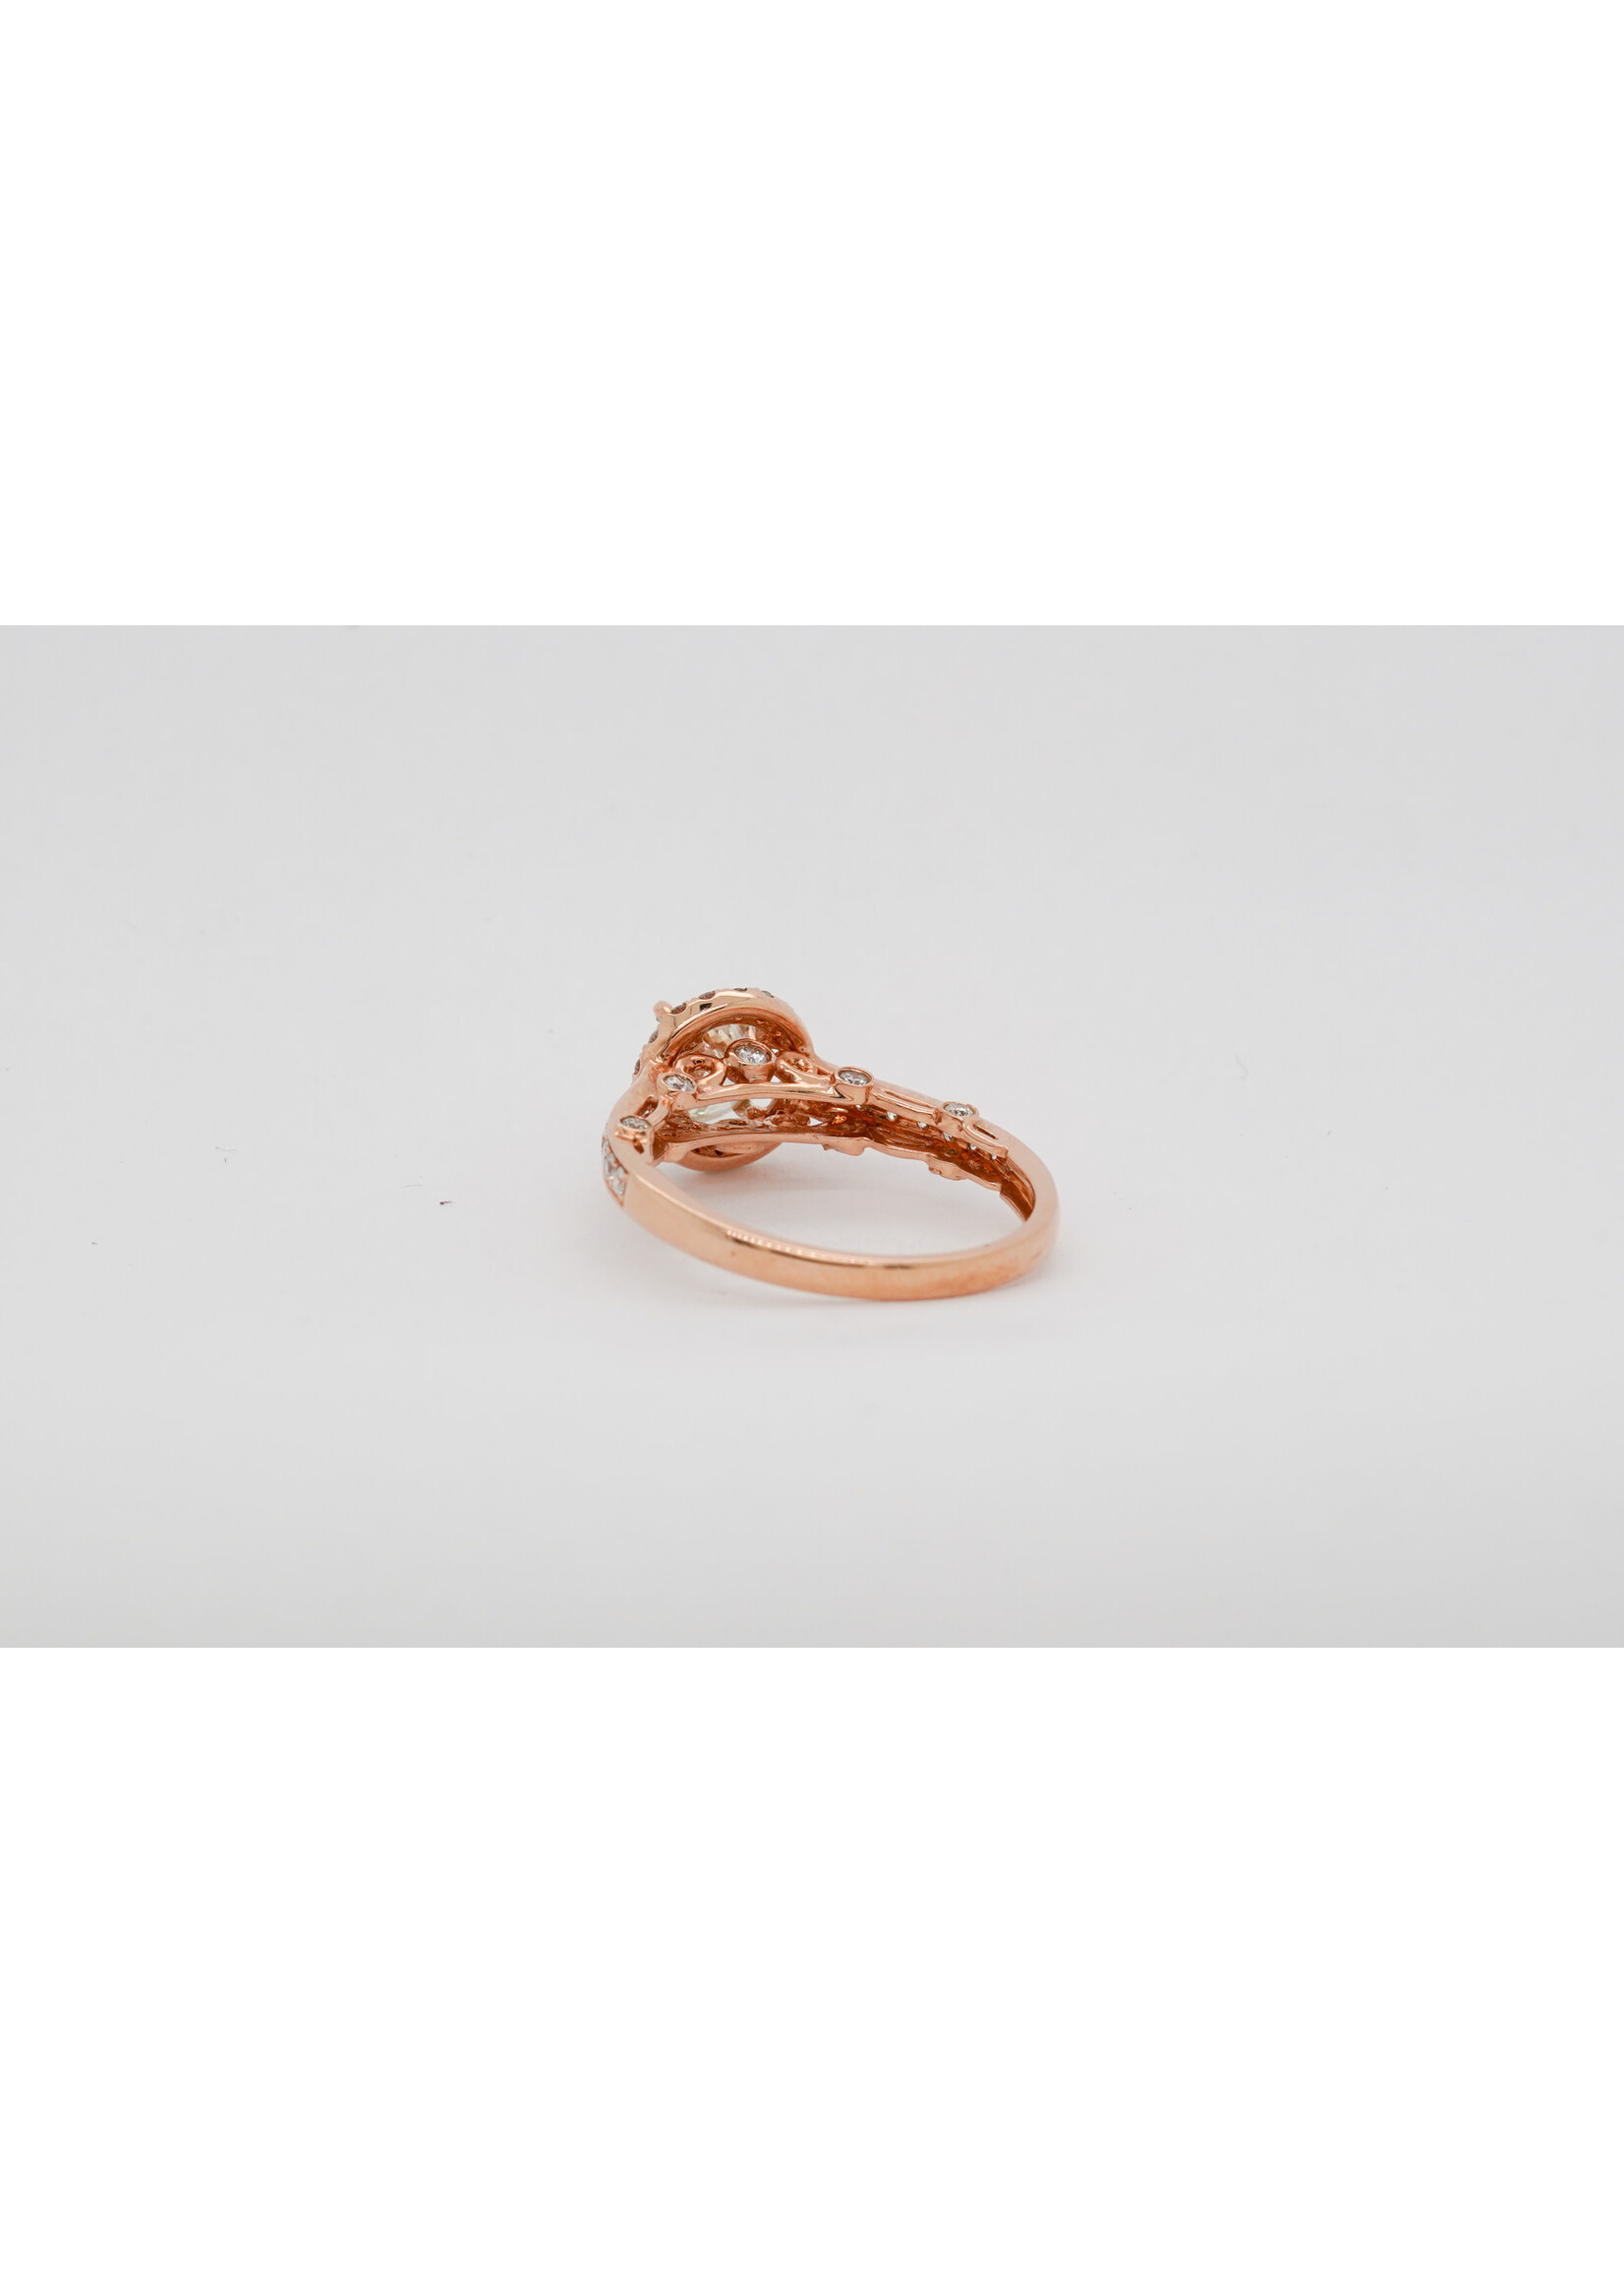 14KR 2.87g 1.45TW (1.00ctr) K/SI2 Old European Cut Diamond Halo Engagement Ring (size 6.5)